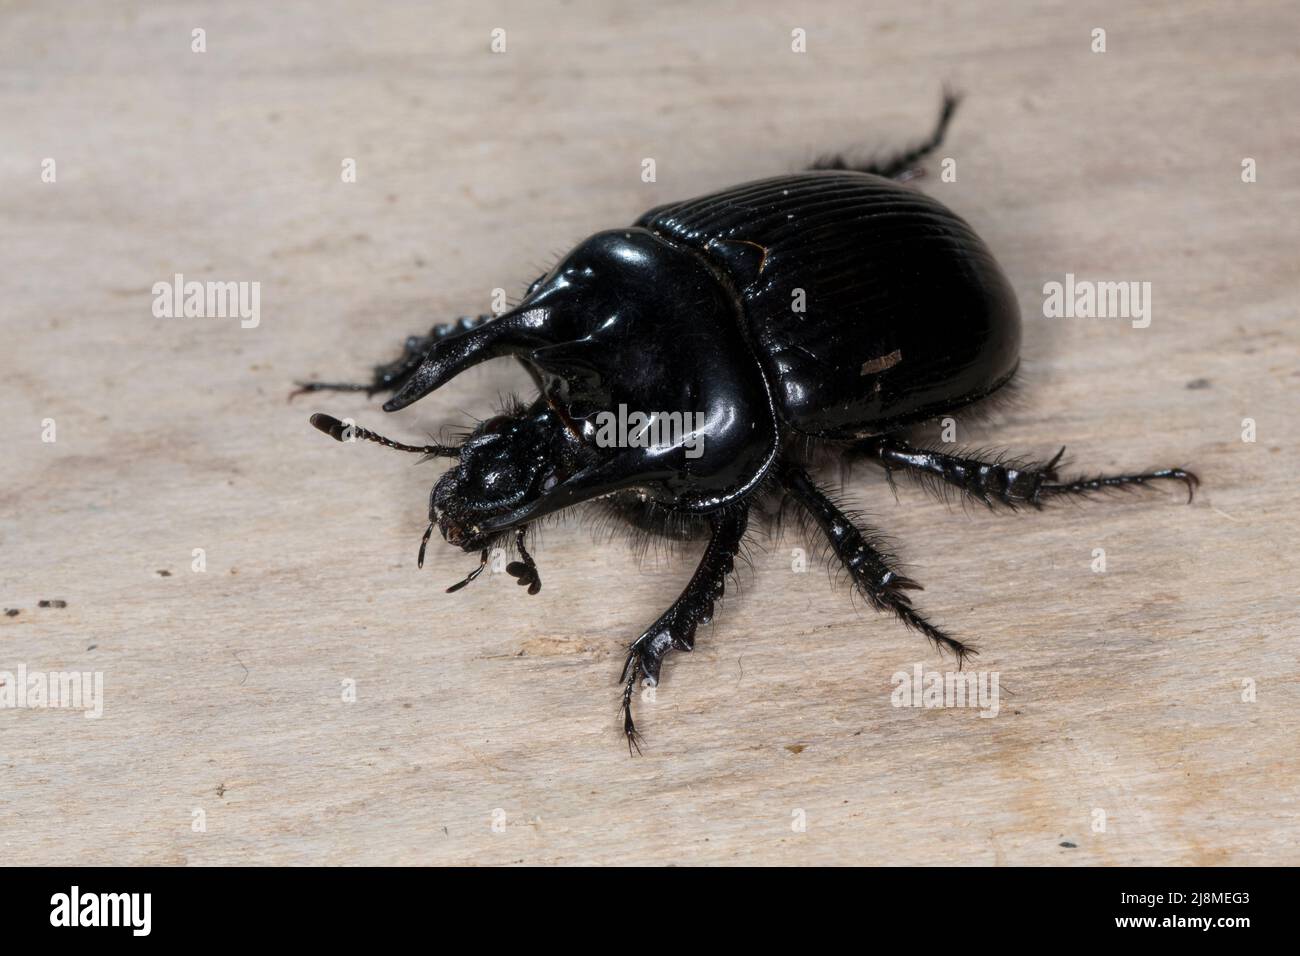 Stierkäfer, Männchen, Typhaeus typhoeus, Minotaur beetle, male, Le Minotaure, Mistkäfer, Geotrupidae, dung beetles Stock Photo